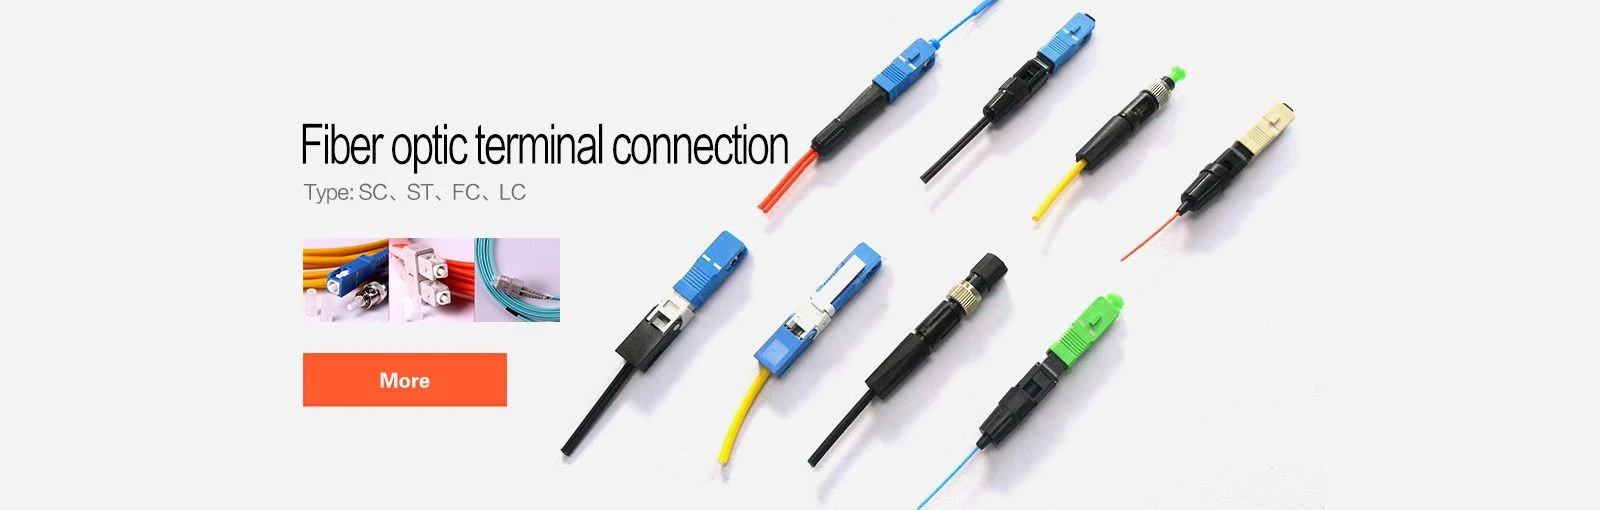 SUK Optical fiber cable